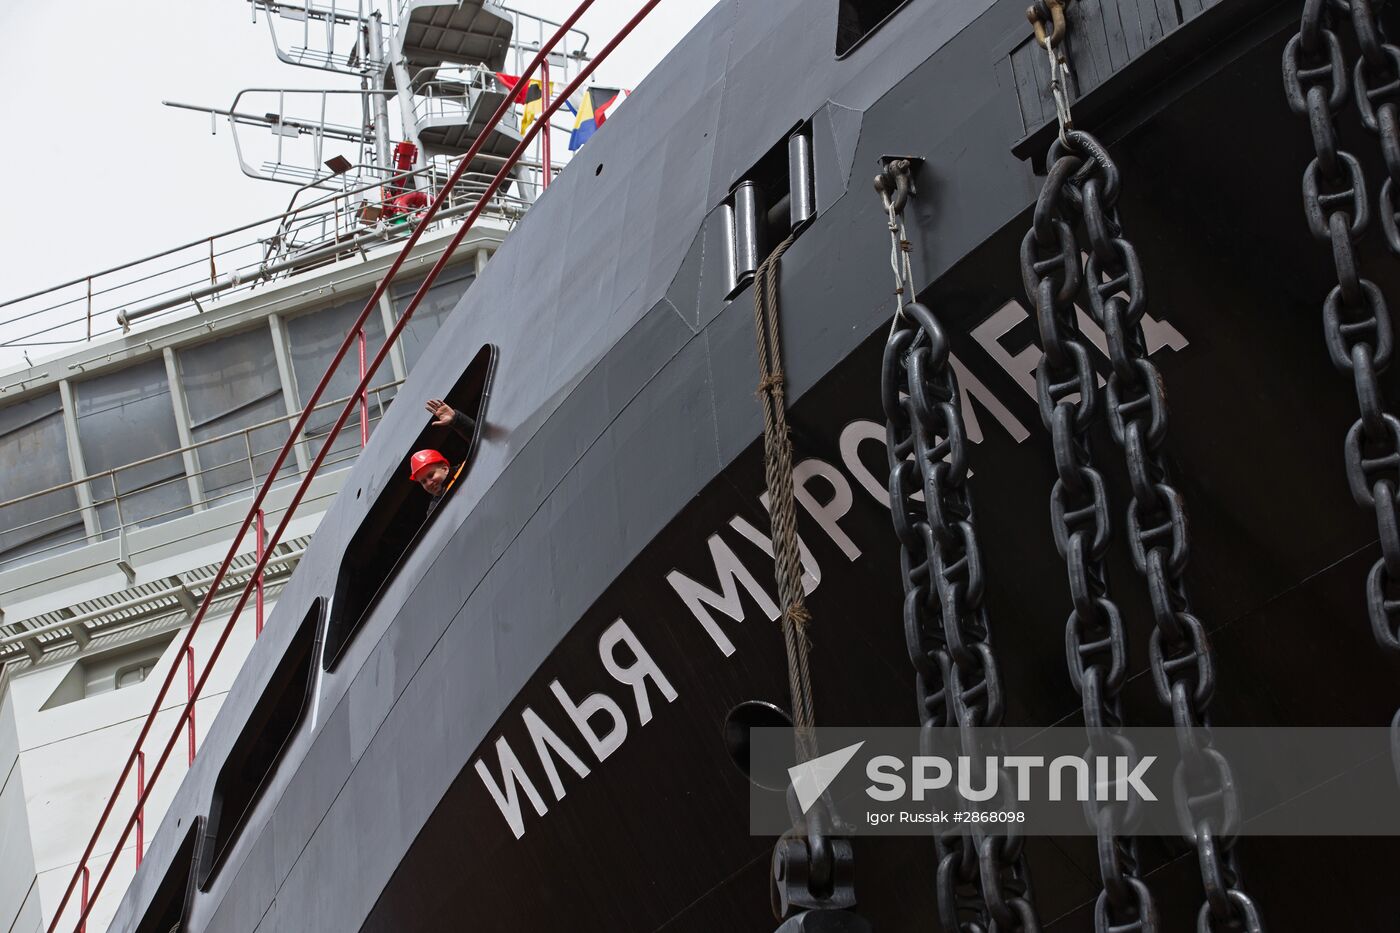 The Ilya Muromets icebreaker floated out in St. Petersburg